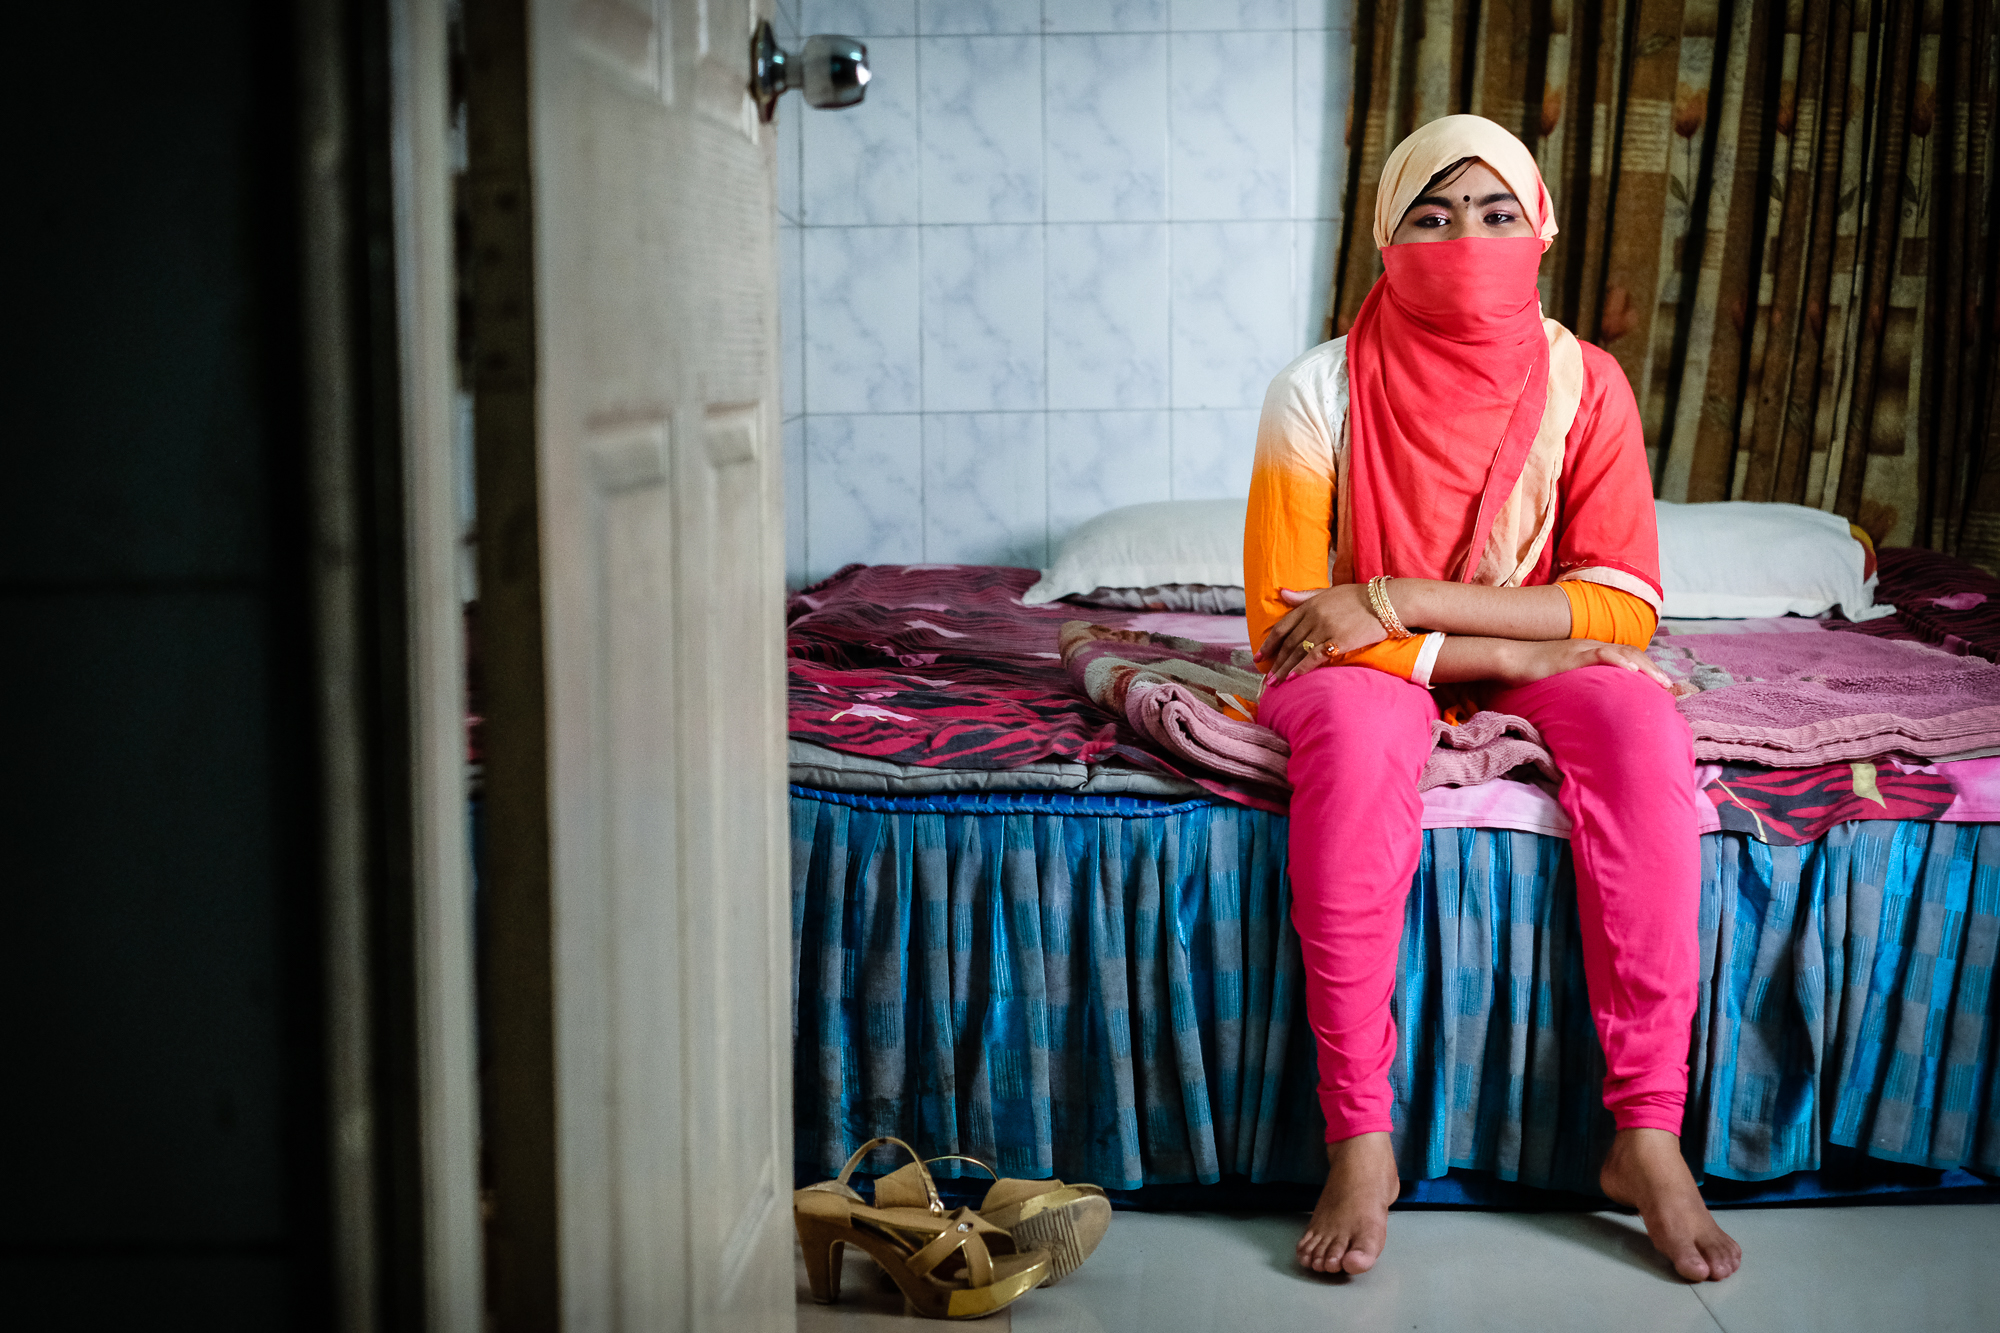 Bangalischoolgirlsex - Pimps and Traffickers Prey on Vulnerable Rohingya Girls | Pulitzer Center